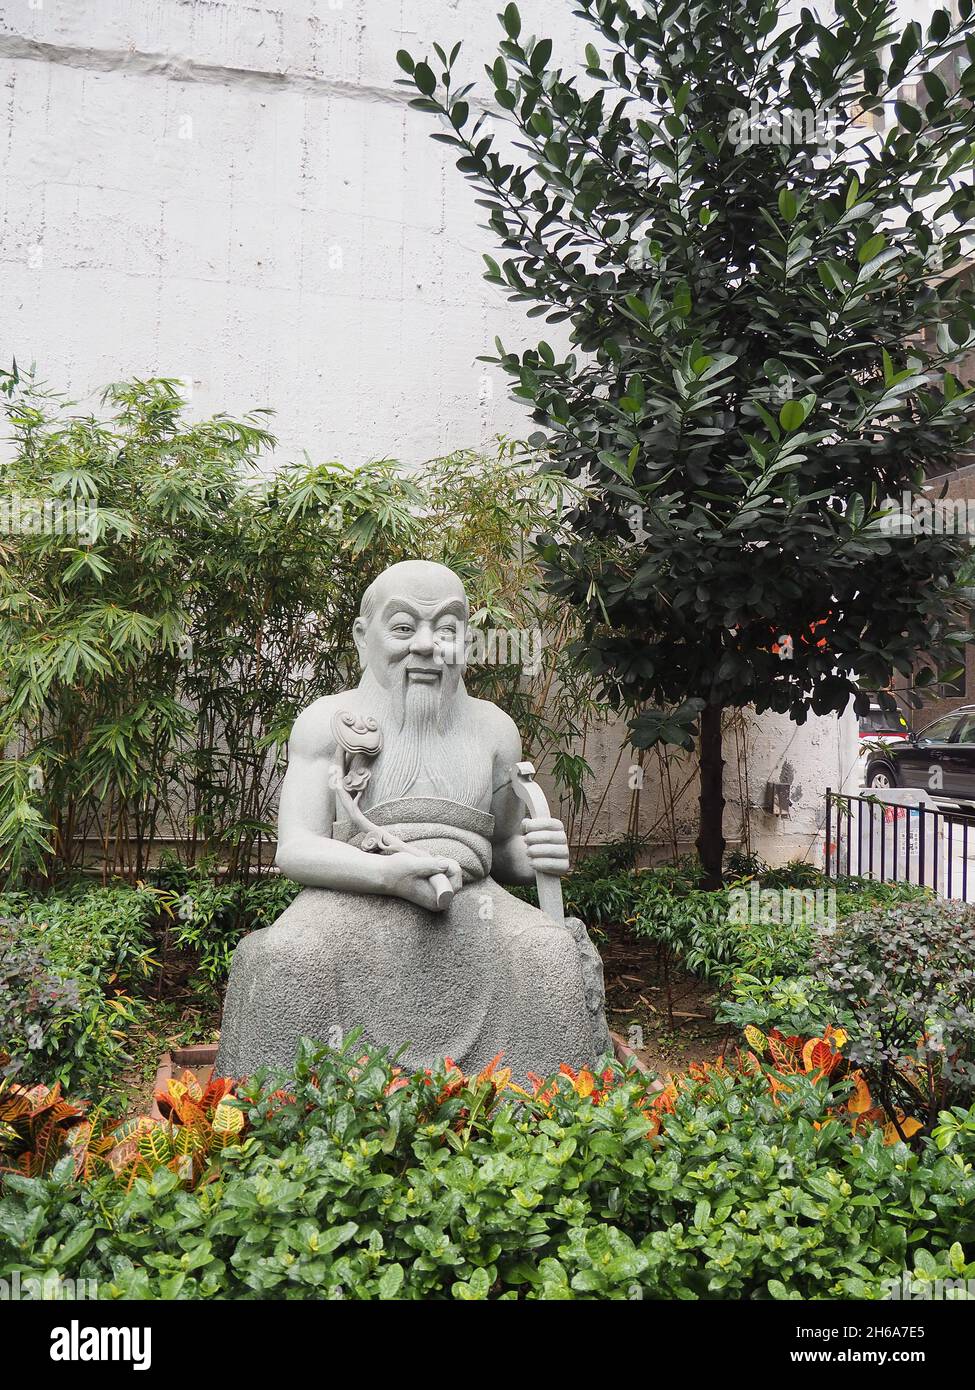 HONG KONG, CHINA - Oct 12, 2018: A beautiful shot of a statue of an old wise Chinese man in Hong Kong, China Stock Photo